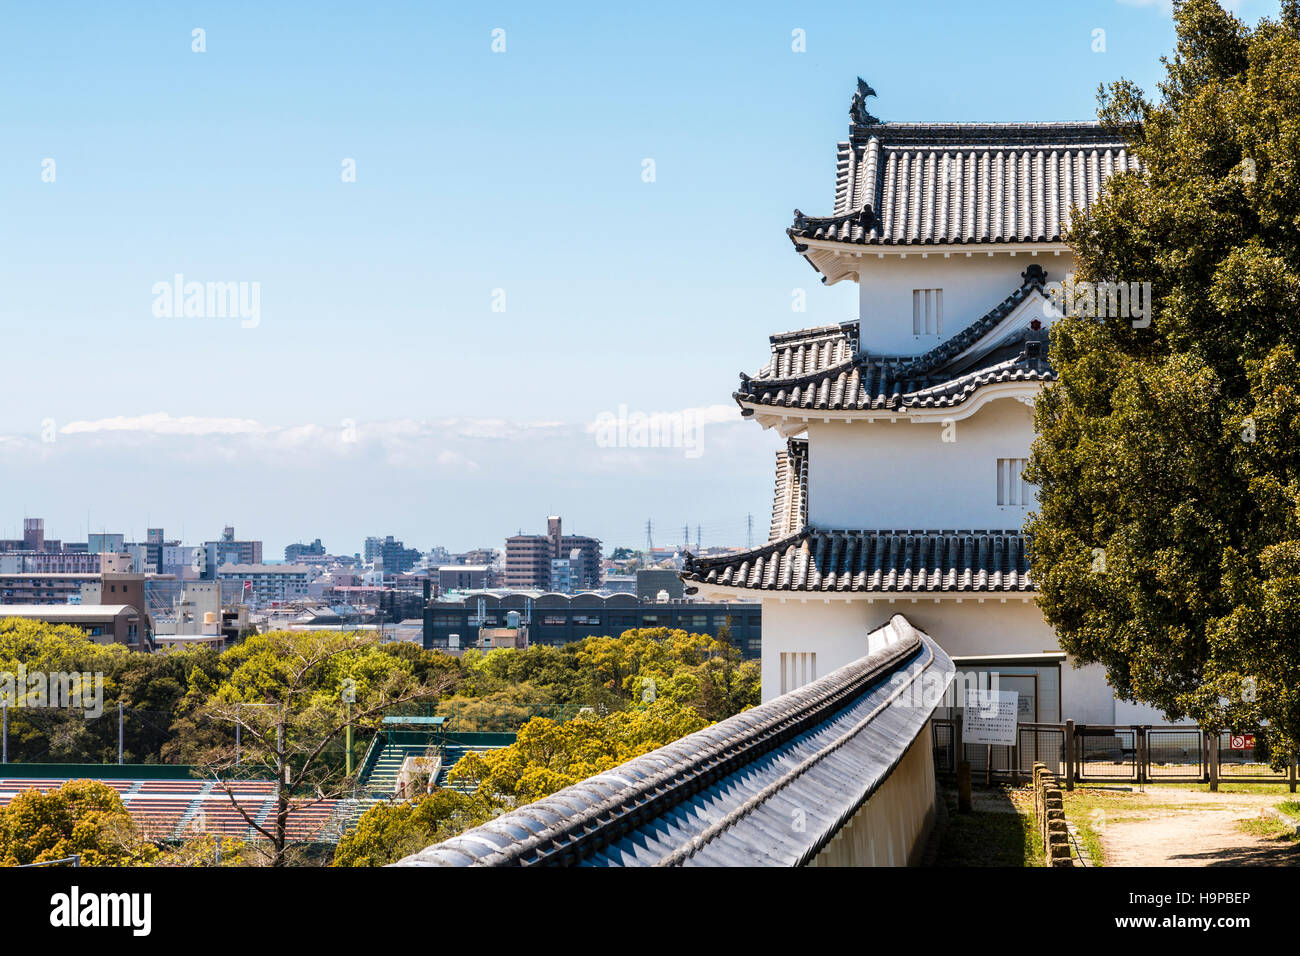 Giappone, Akashi castle, AKA Kishun-jo. La storia di tre Hitsujisaru yagura, torretta, con cielo blu sullo sfondo. Foto Stock